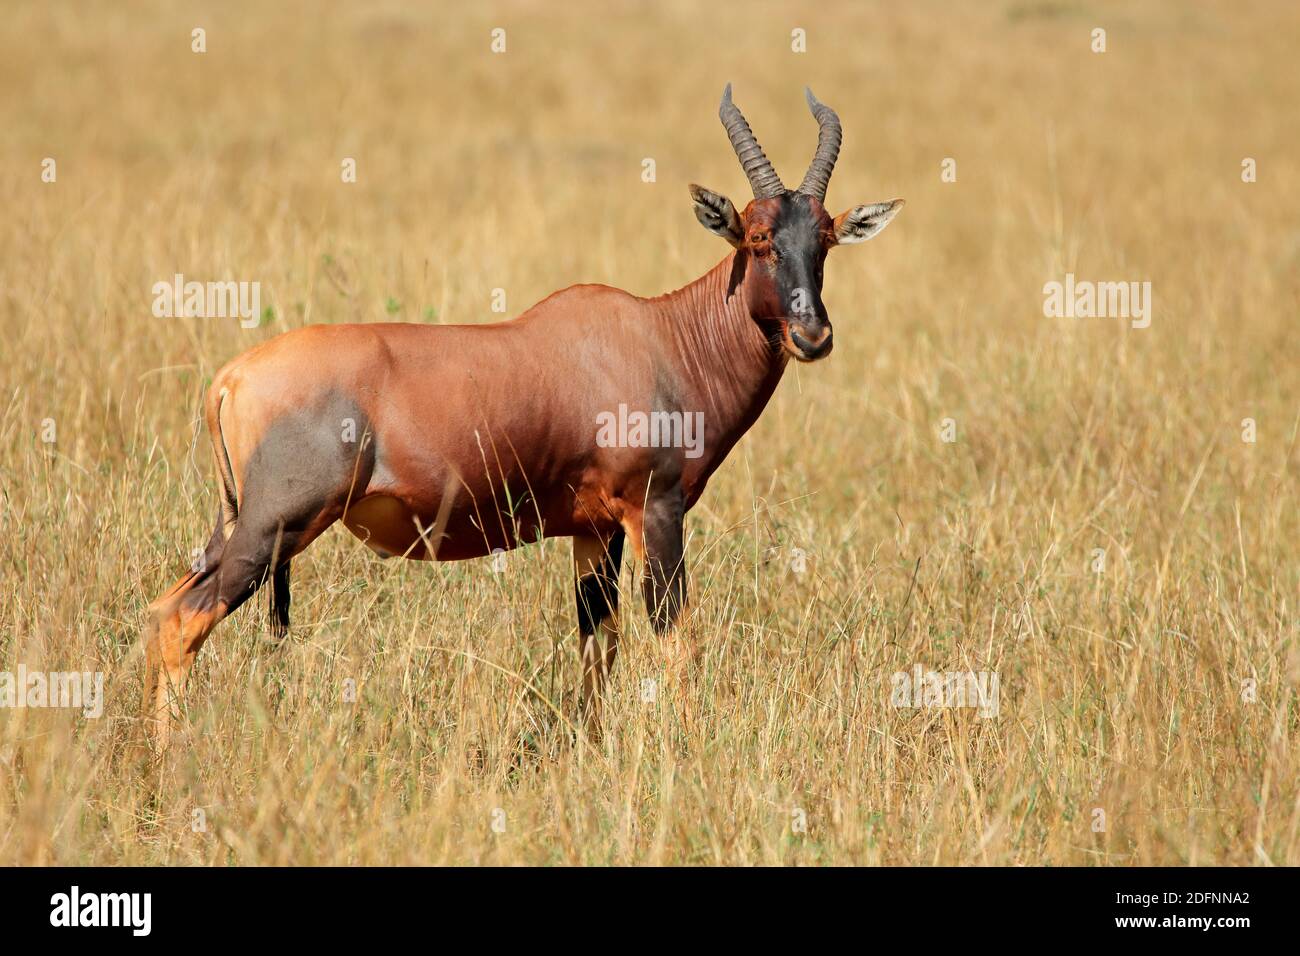 A topi antelope (Damaliscus korrigum) in grassland, Masai Mara National Reserve, Kenya Stock Photo